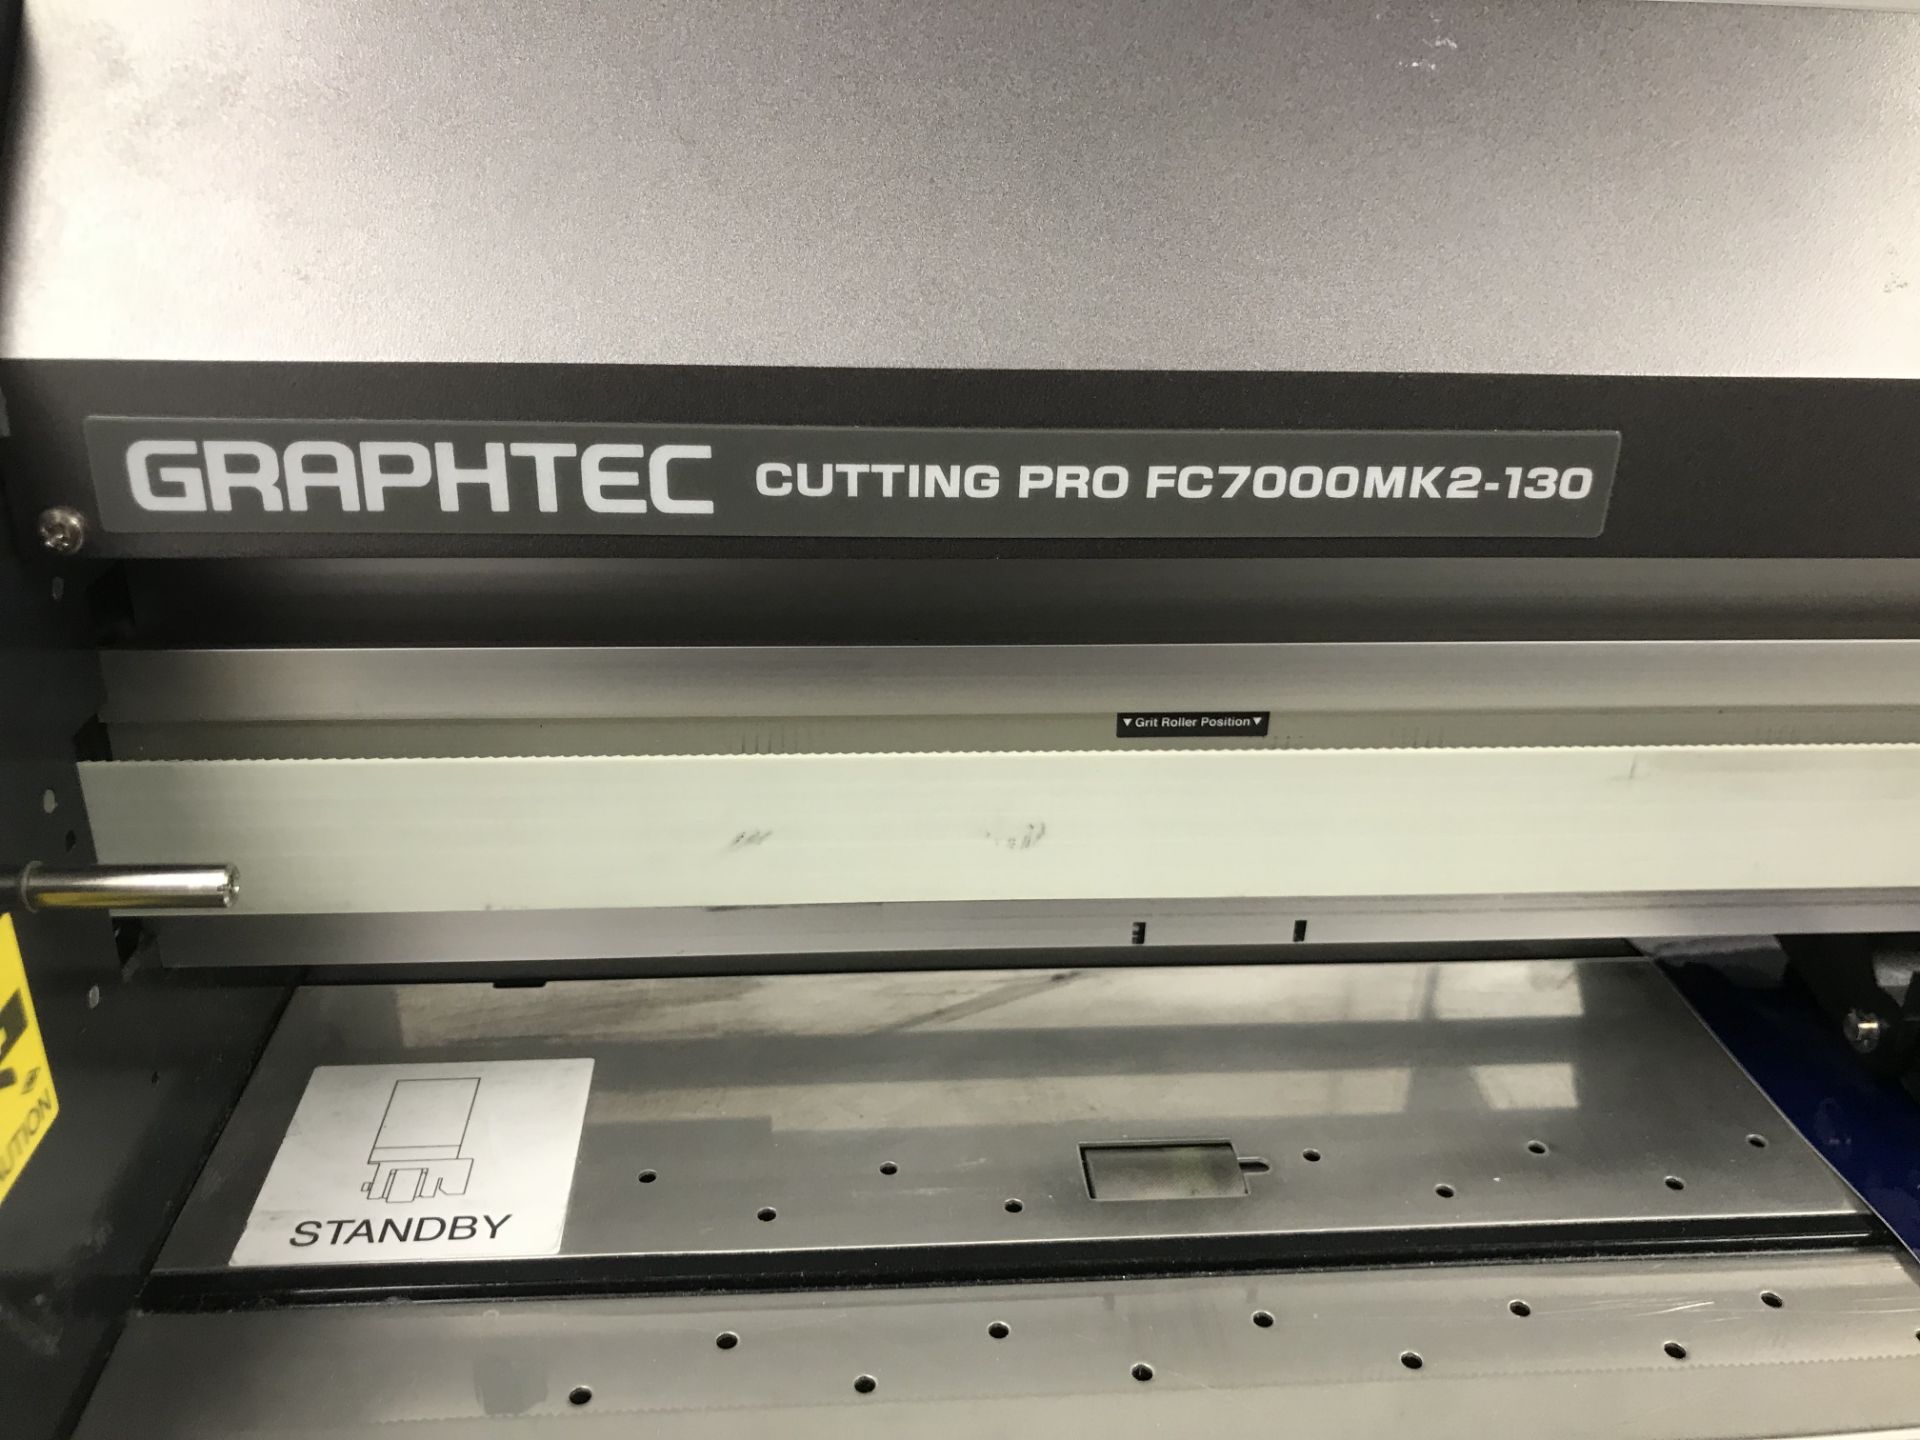 Graphtec FC7000MK2-130 Cutting Pro Vinyl Cutter w/ CD User Manual - Image 3 of 8